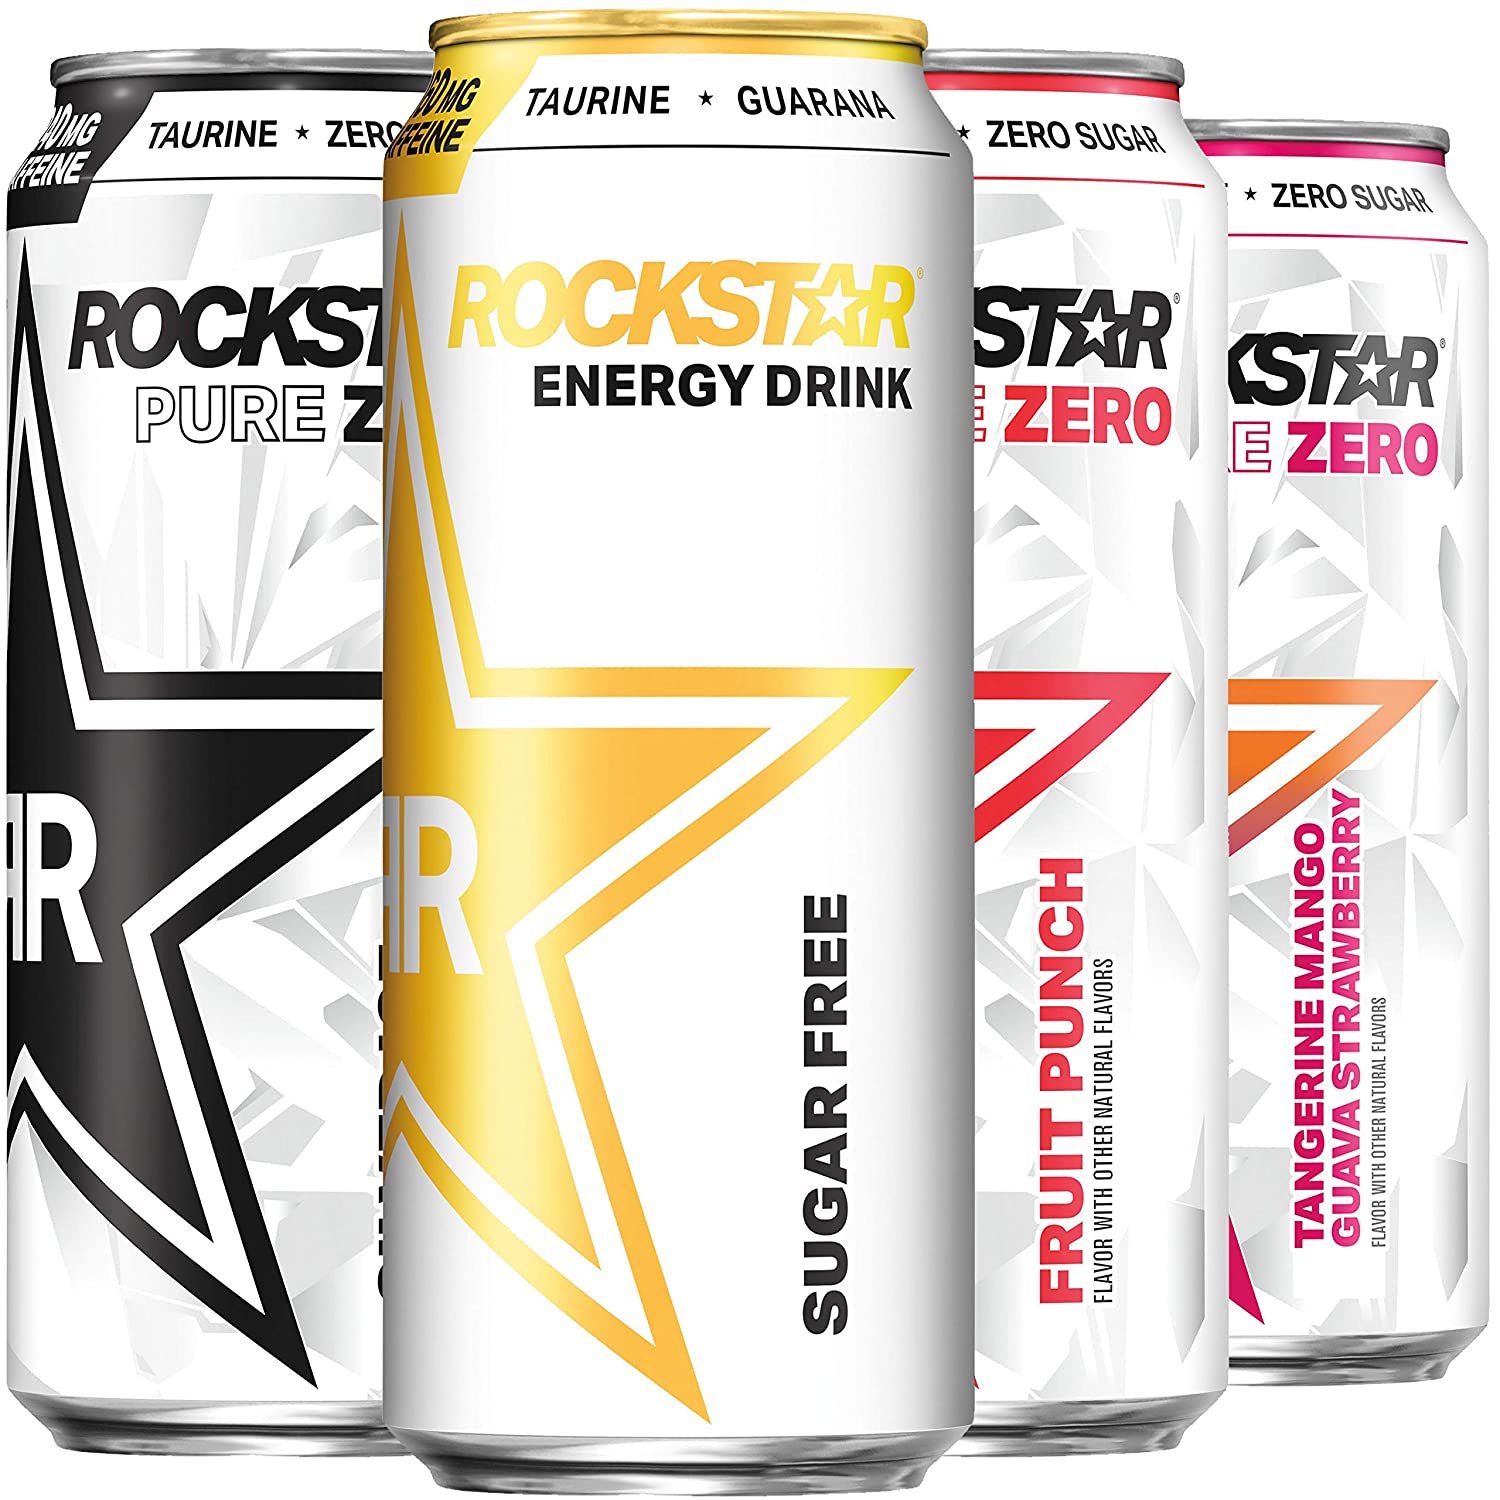 12-Pack 16oz. Rockstar Energy Drink Variety Pack (4 Flavor Zero Sugar) $10.17 w/ Subscribe & Save via Amazon